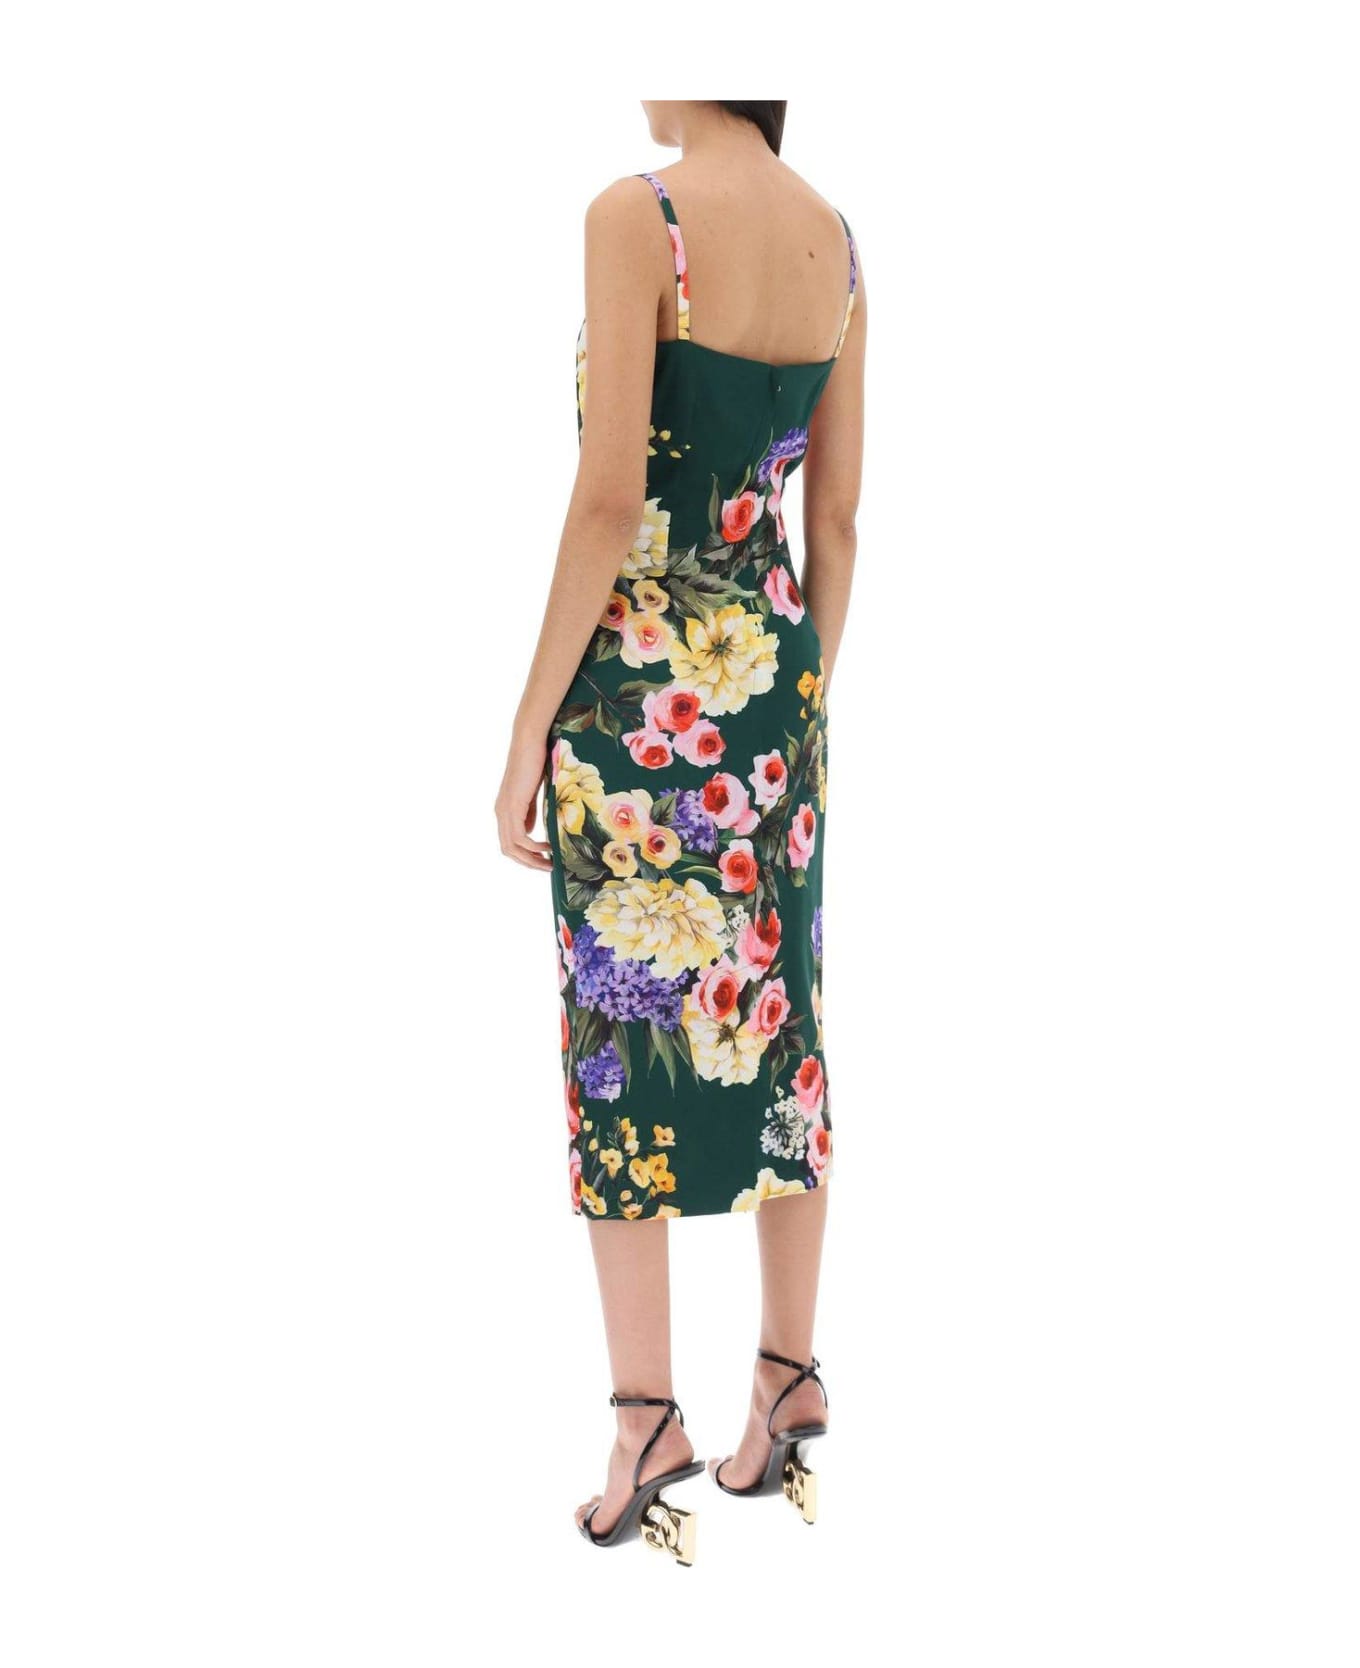 Dolce & Gabbana Garden Printed Charmeuse Strapless Dress - dolce gabbana dg buckled ankle booties item